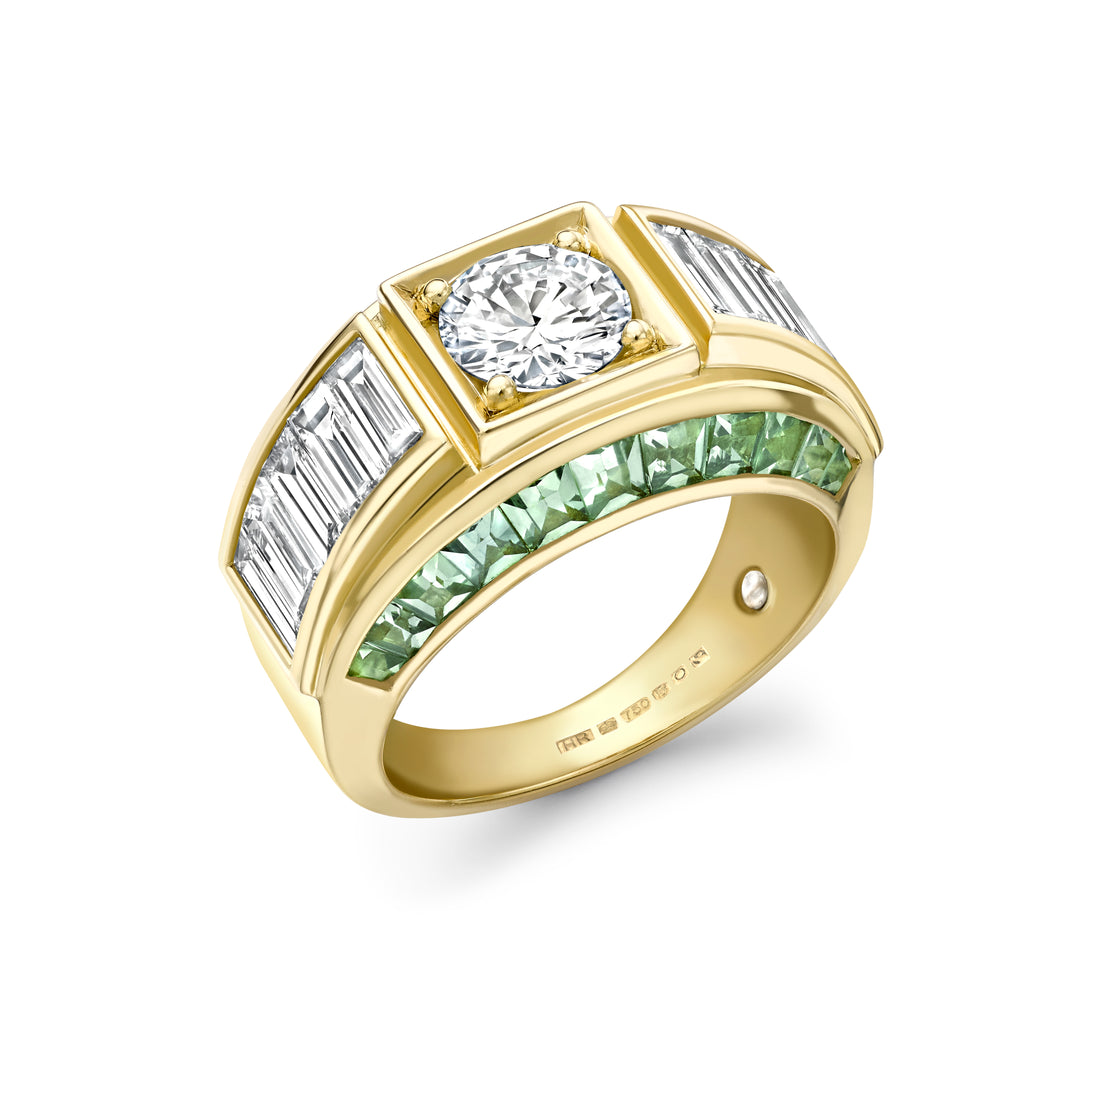  Brilliant Cut Diamond & Green Sapphire Ring by Hattie Rickards | The Cut London